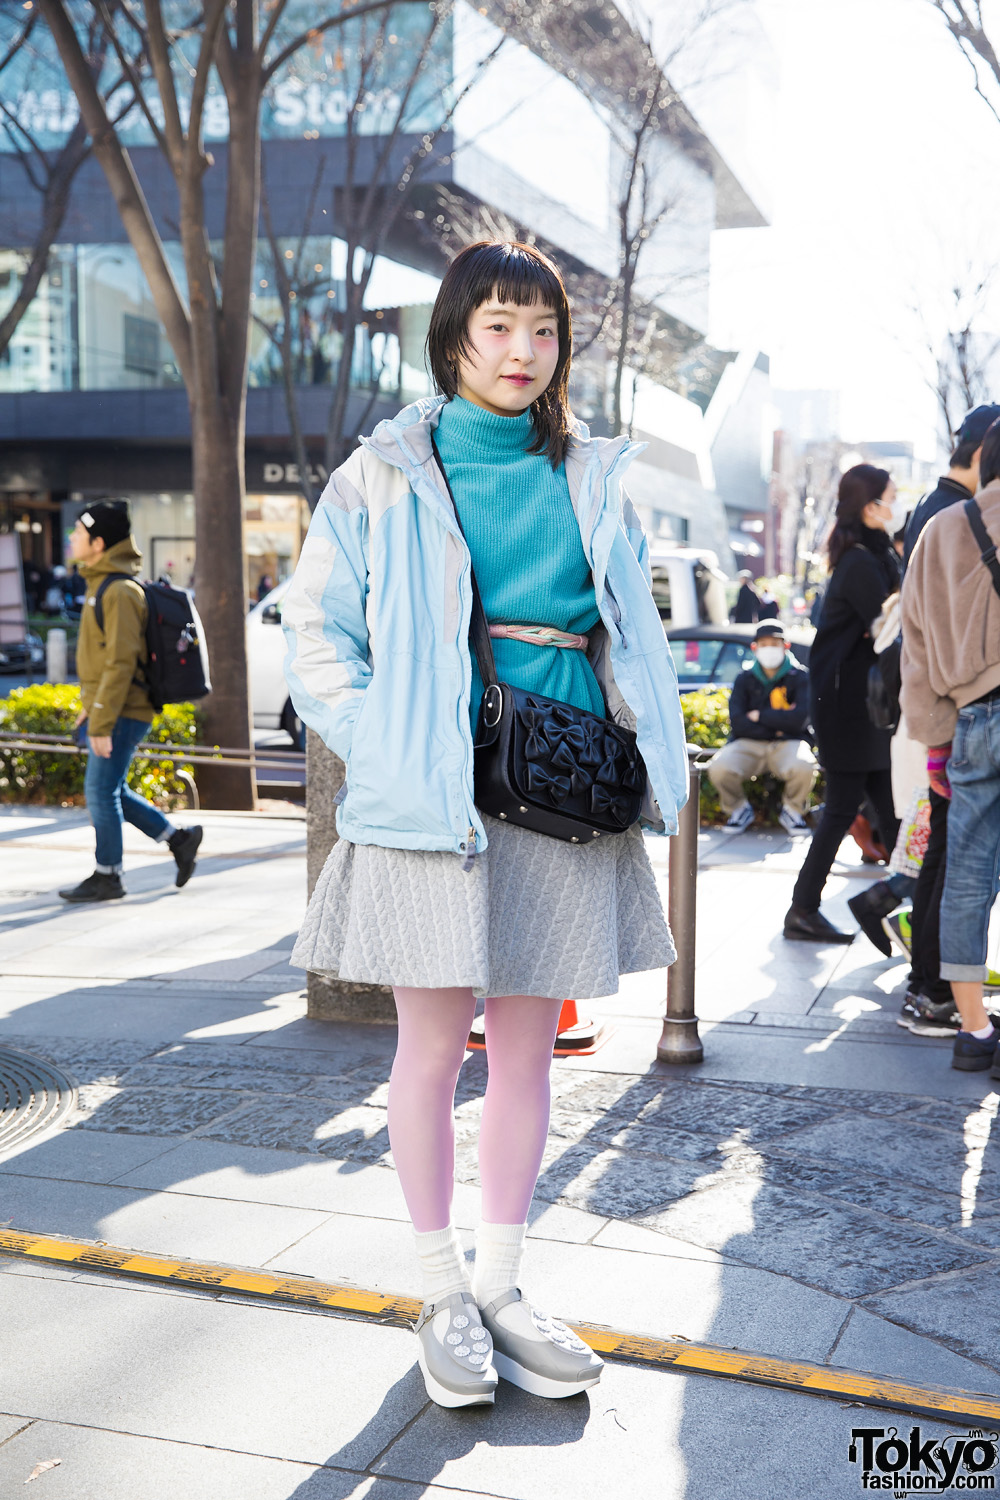 Tokyo Bopper Staff in Cute Winter Pastel Fashion w/ The North Face, Bulle De Savon, Theatre Products & Tokyo Bopper